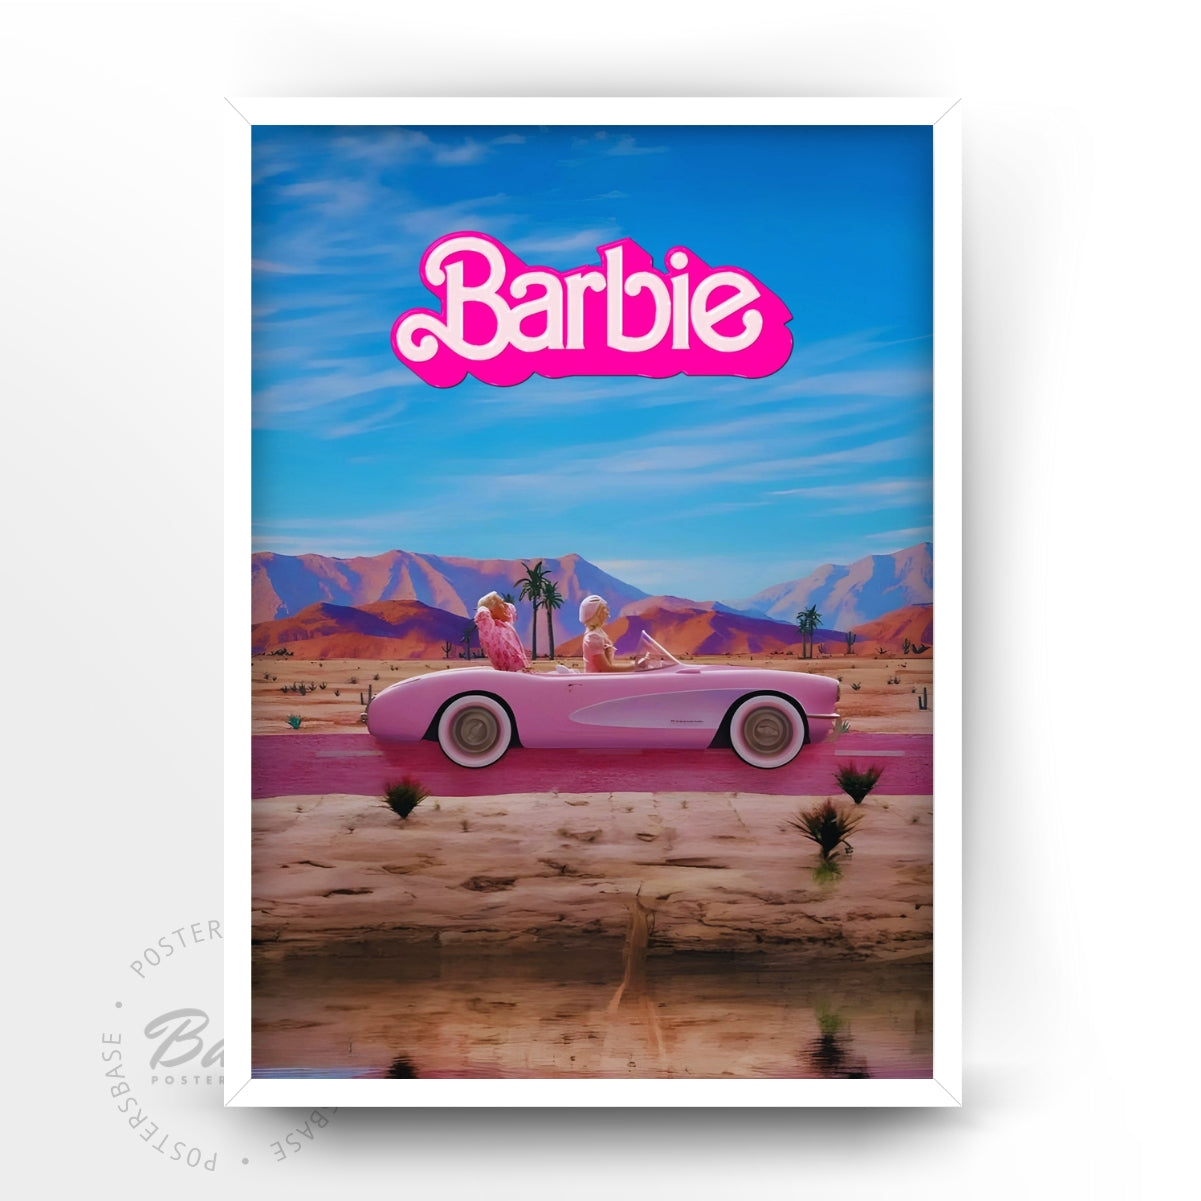 Barbie Trip